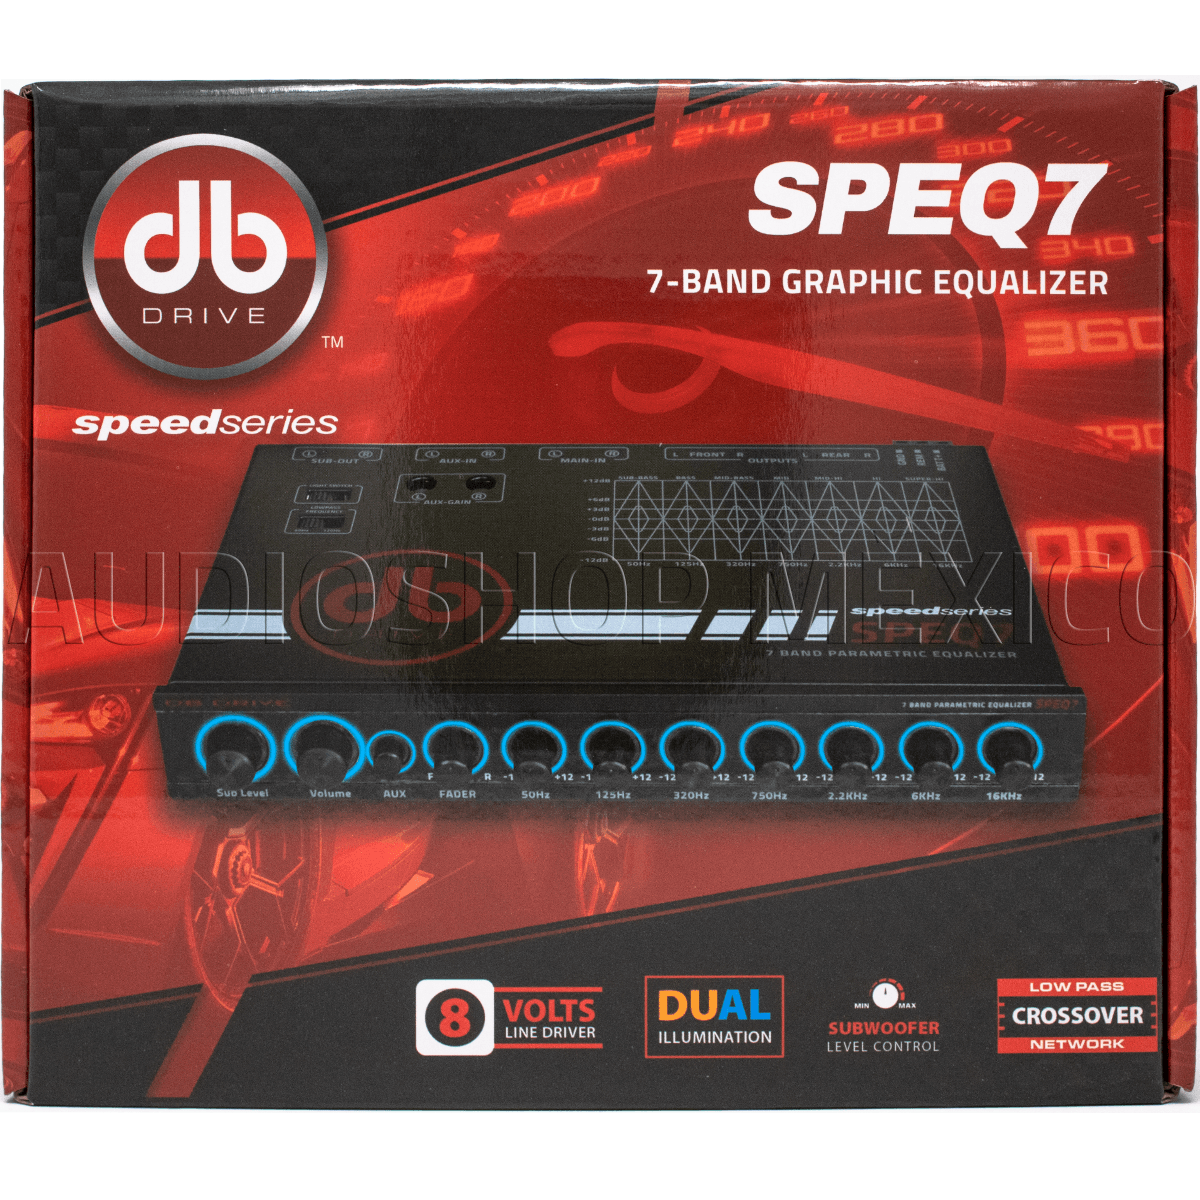 Ecualizador Paramétrico 7 Bandas DB Drive SPEQ7 8 Volts con Control de volumen variable Speed Series